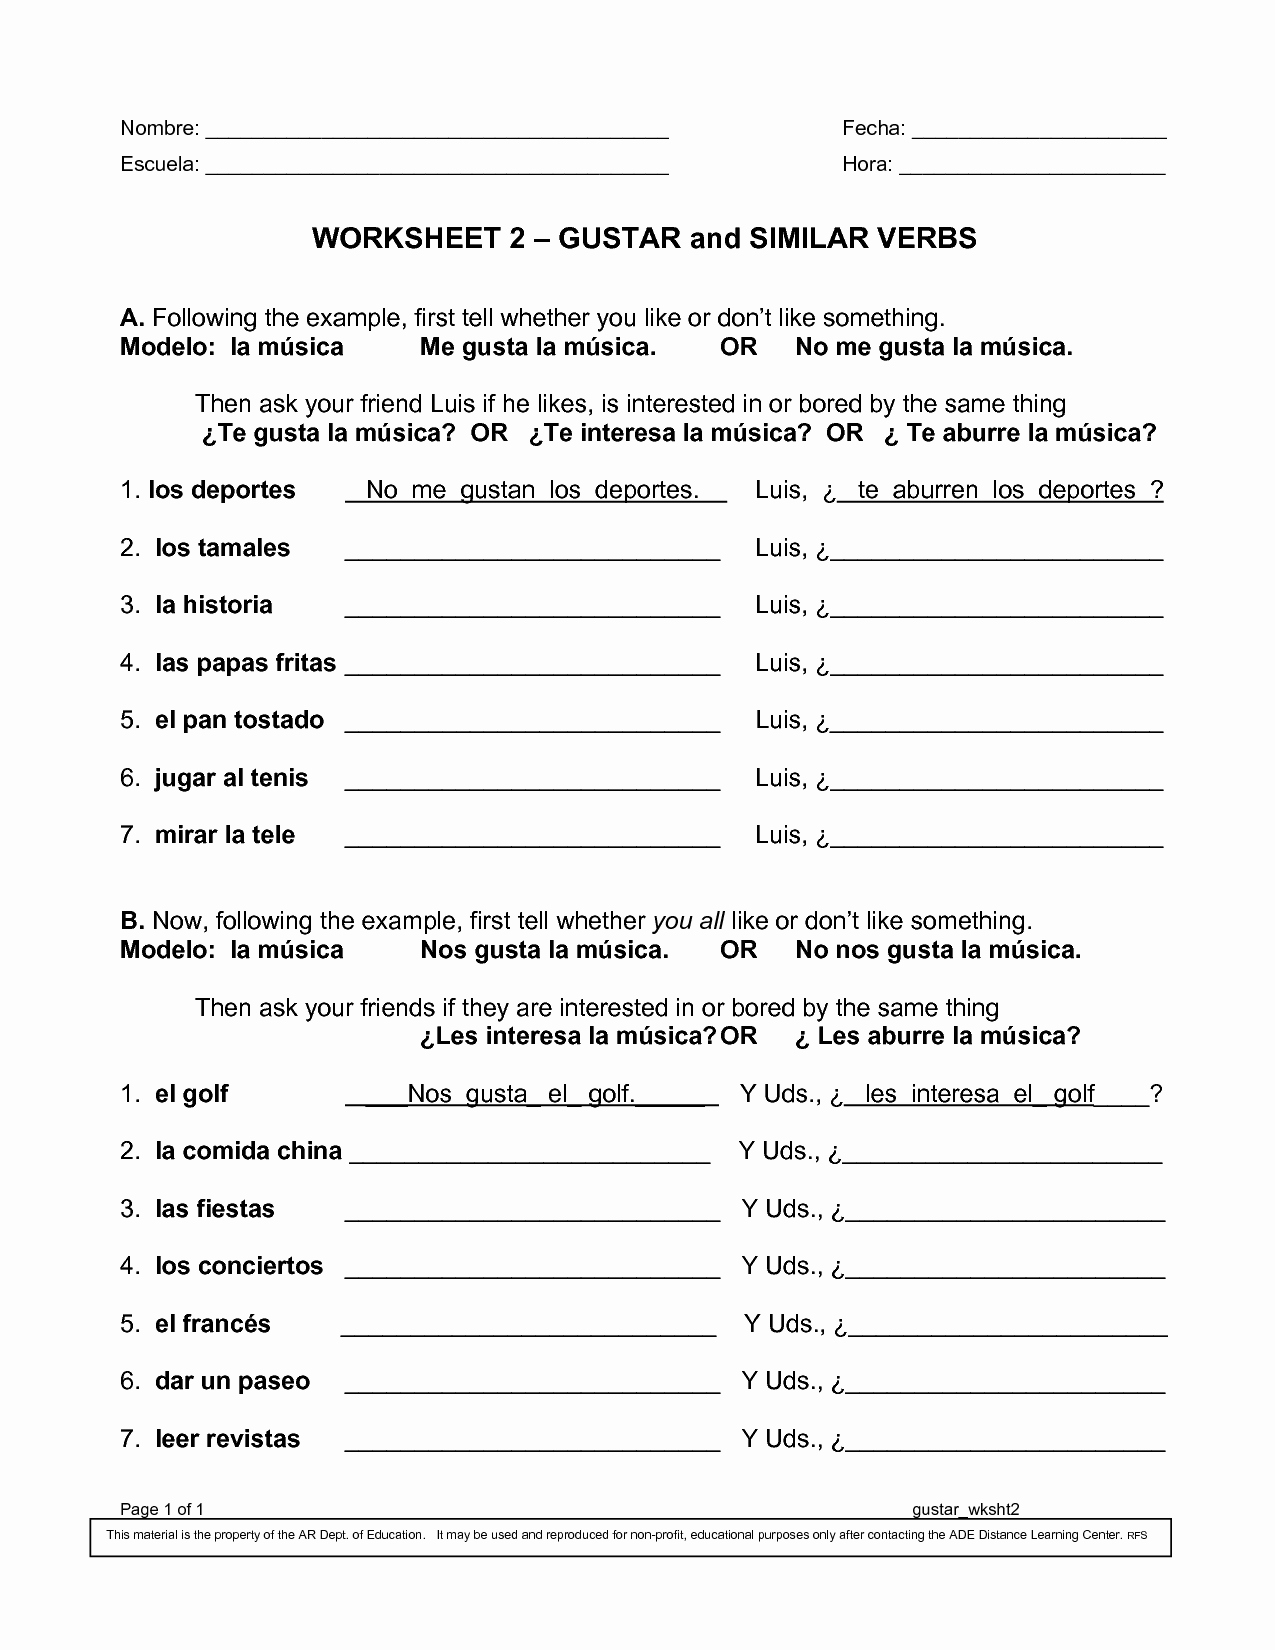 Verbs Worksheets for Middle School Beautiful Worksheet 2 Gustar and Similar Verbs Pdf